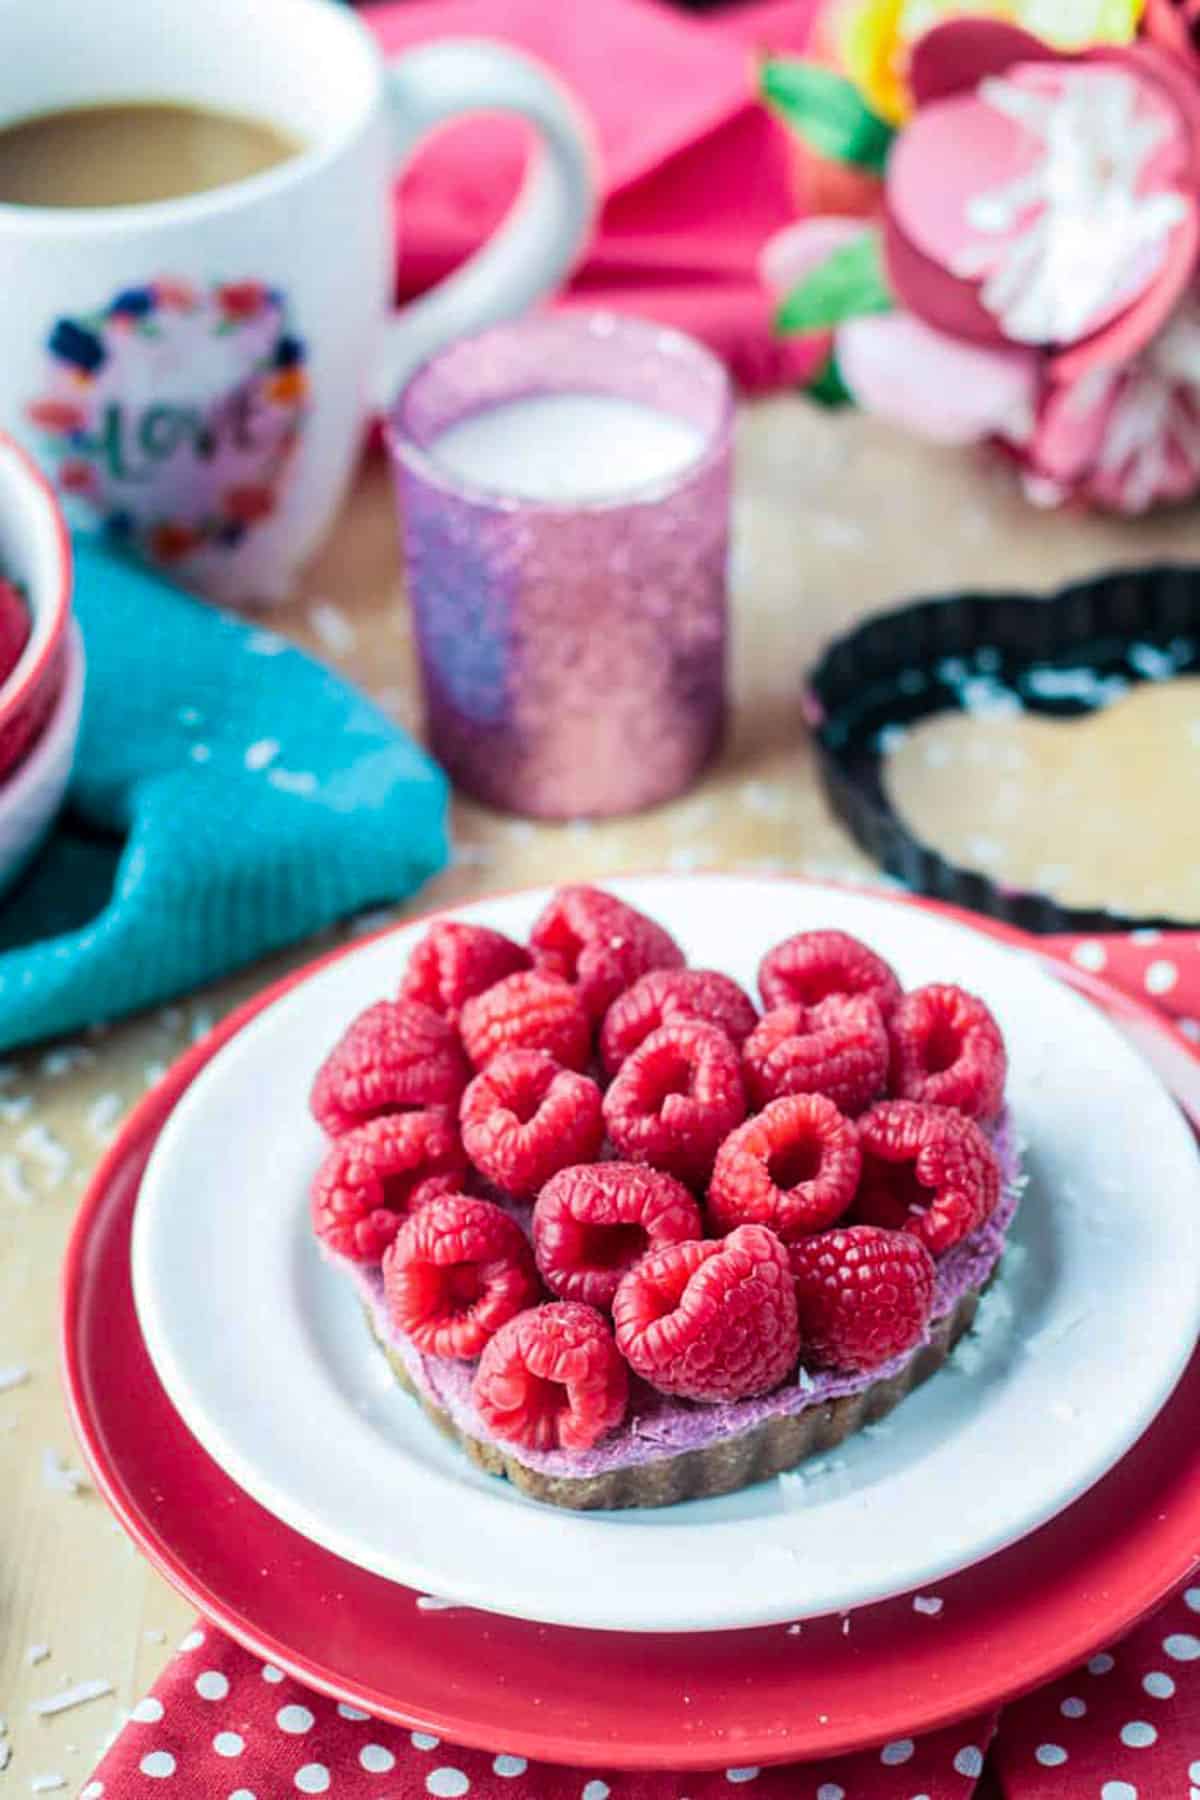 Fresh raspberries covering the top of a heart shaped tart.